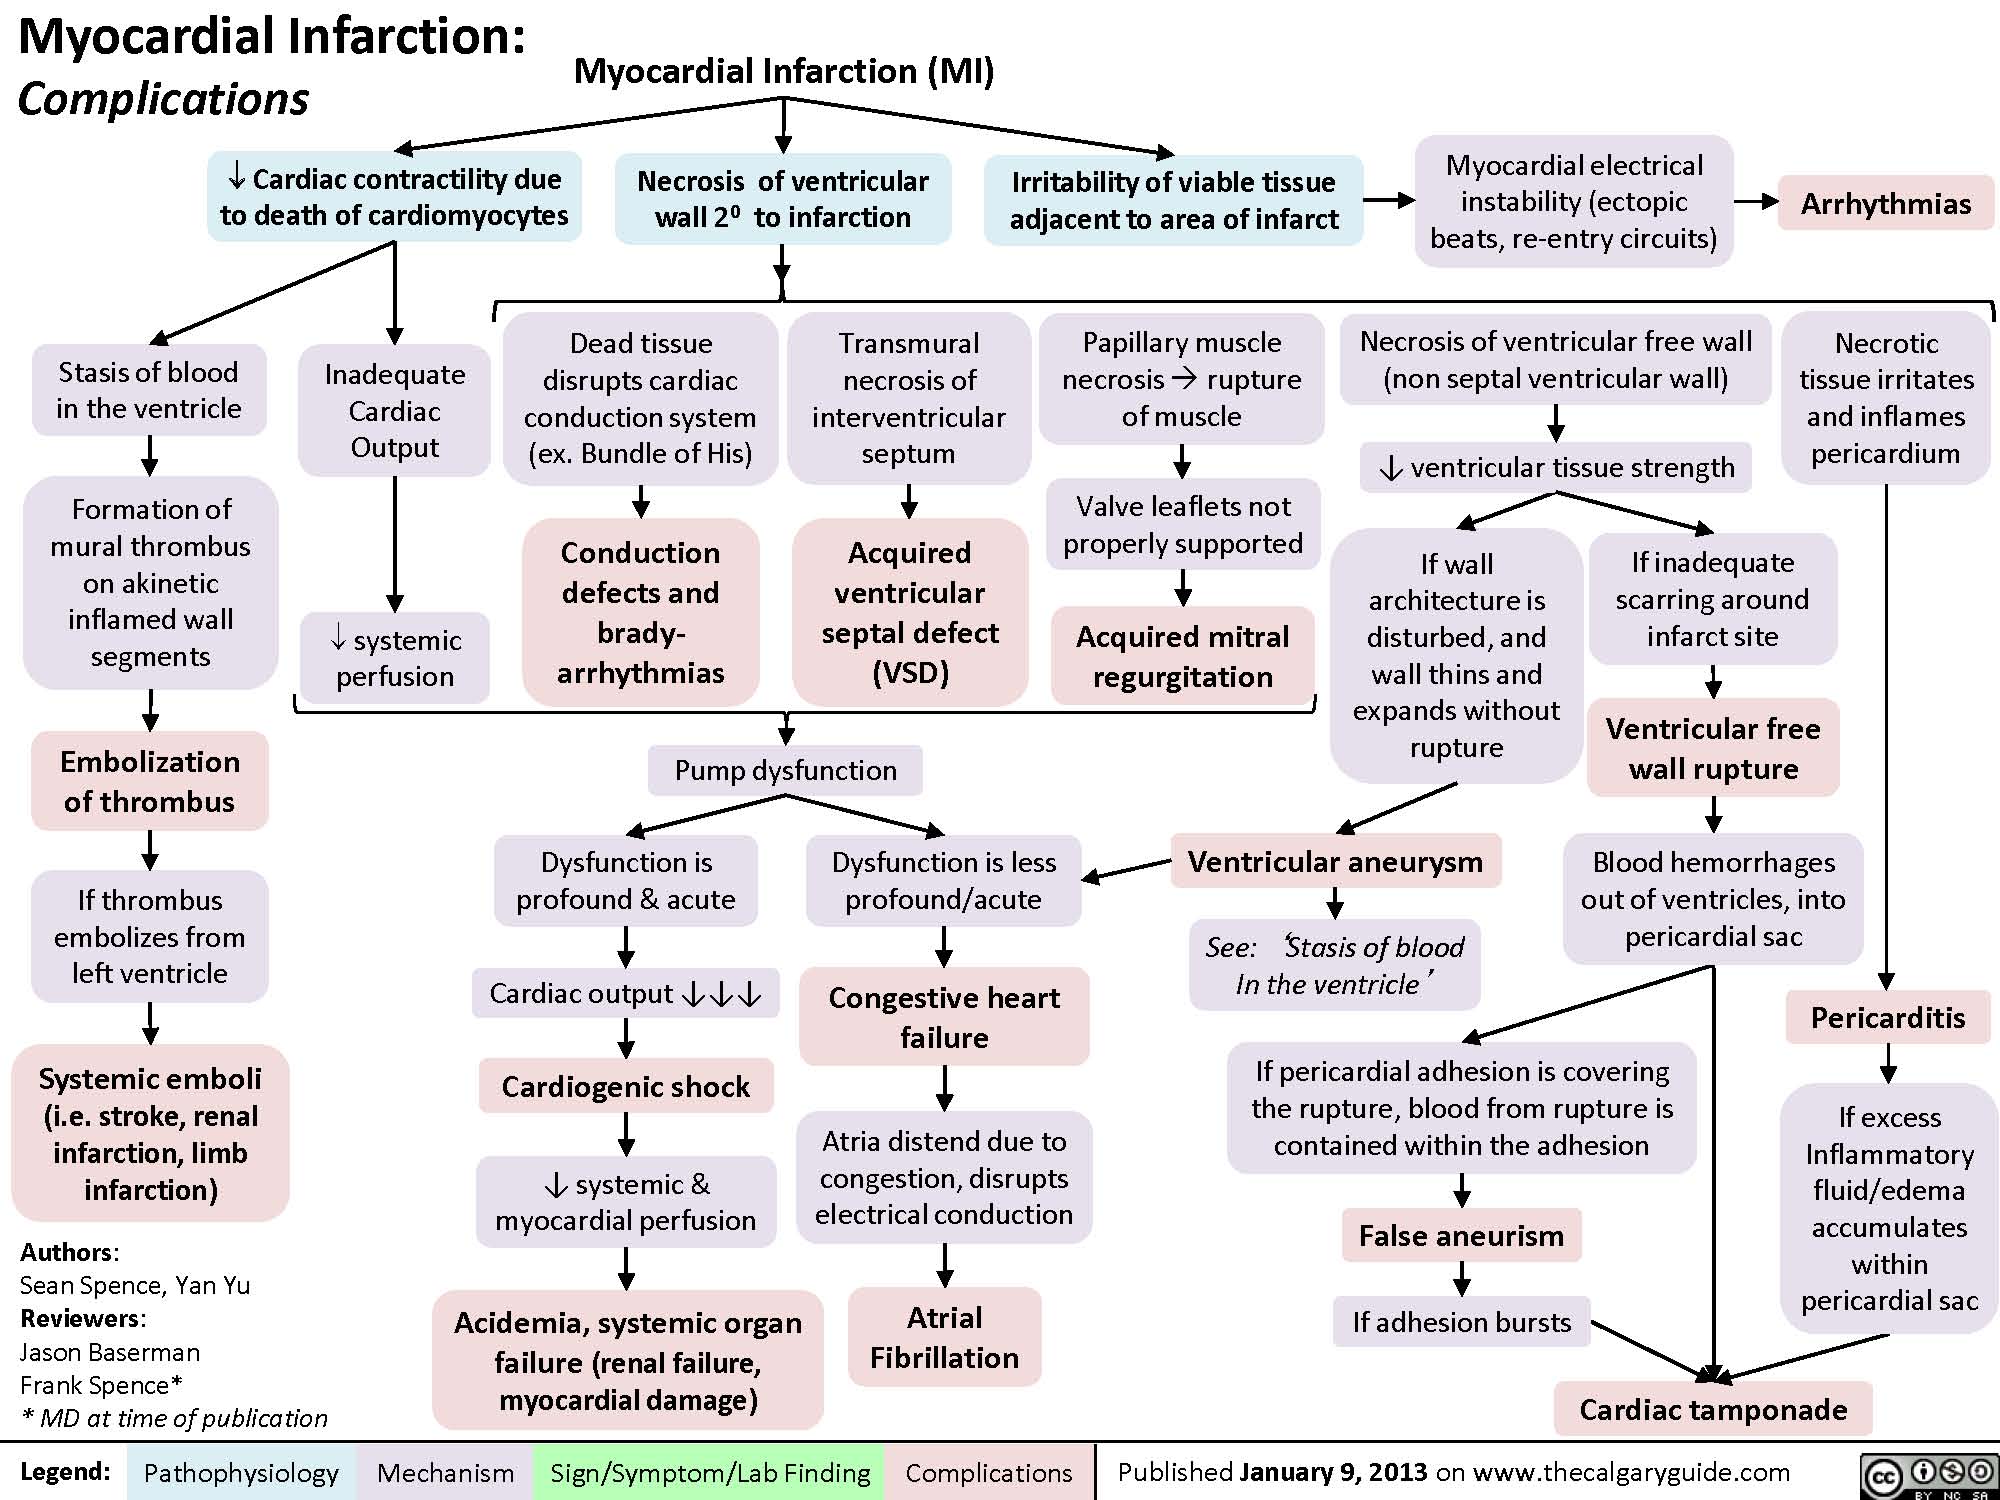 Complications of Myocardial Infarction